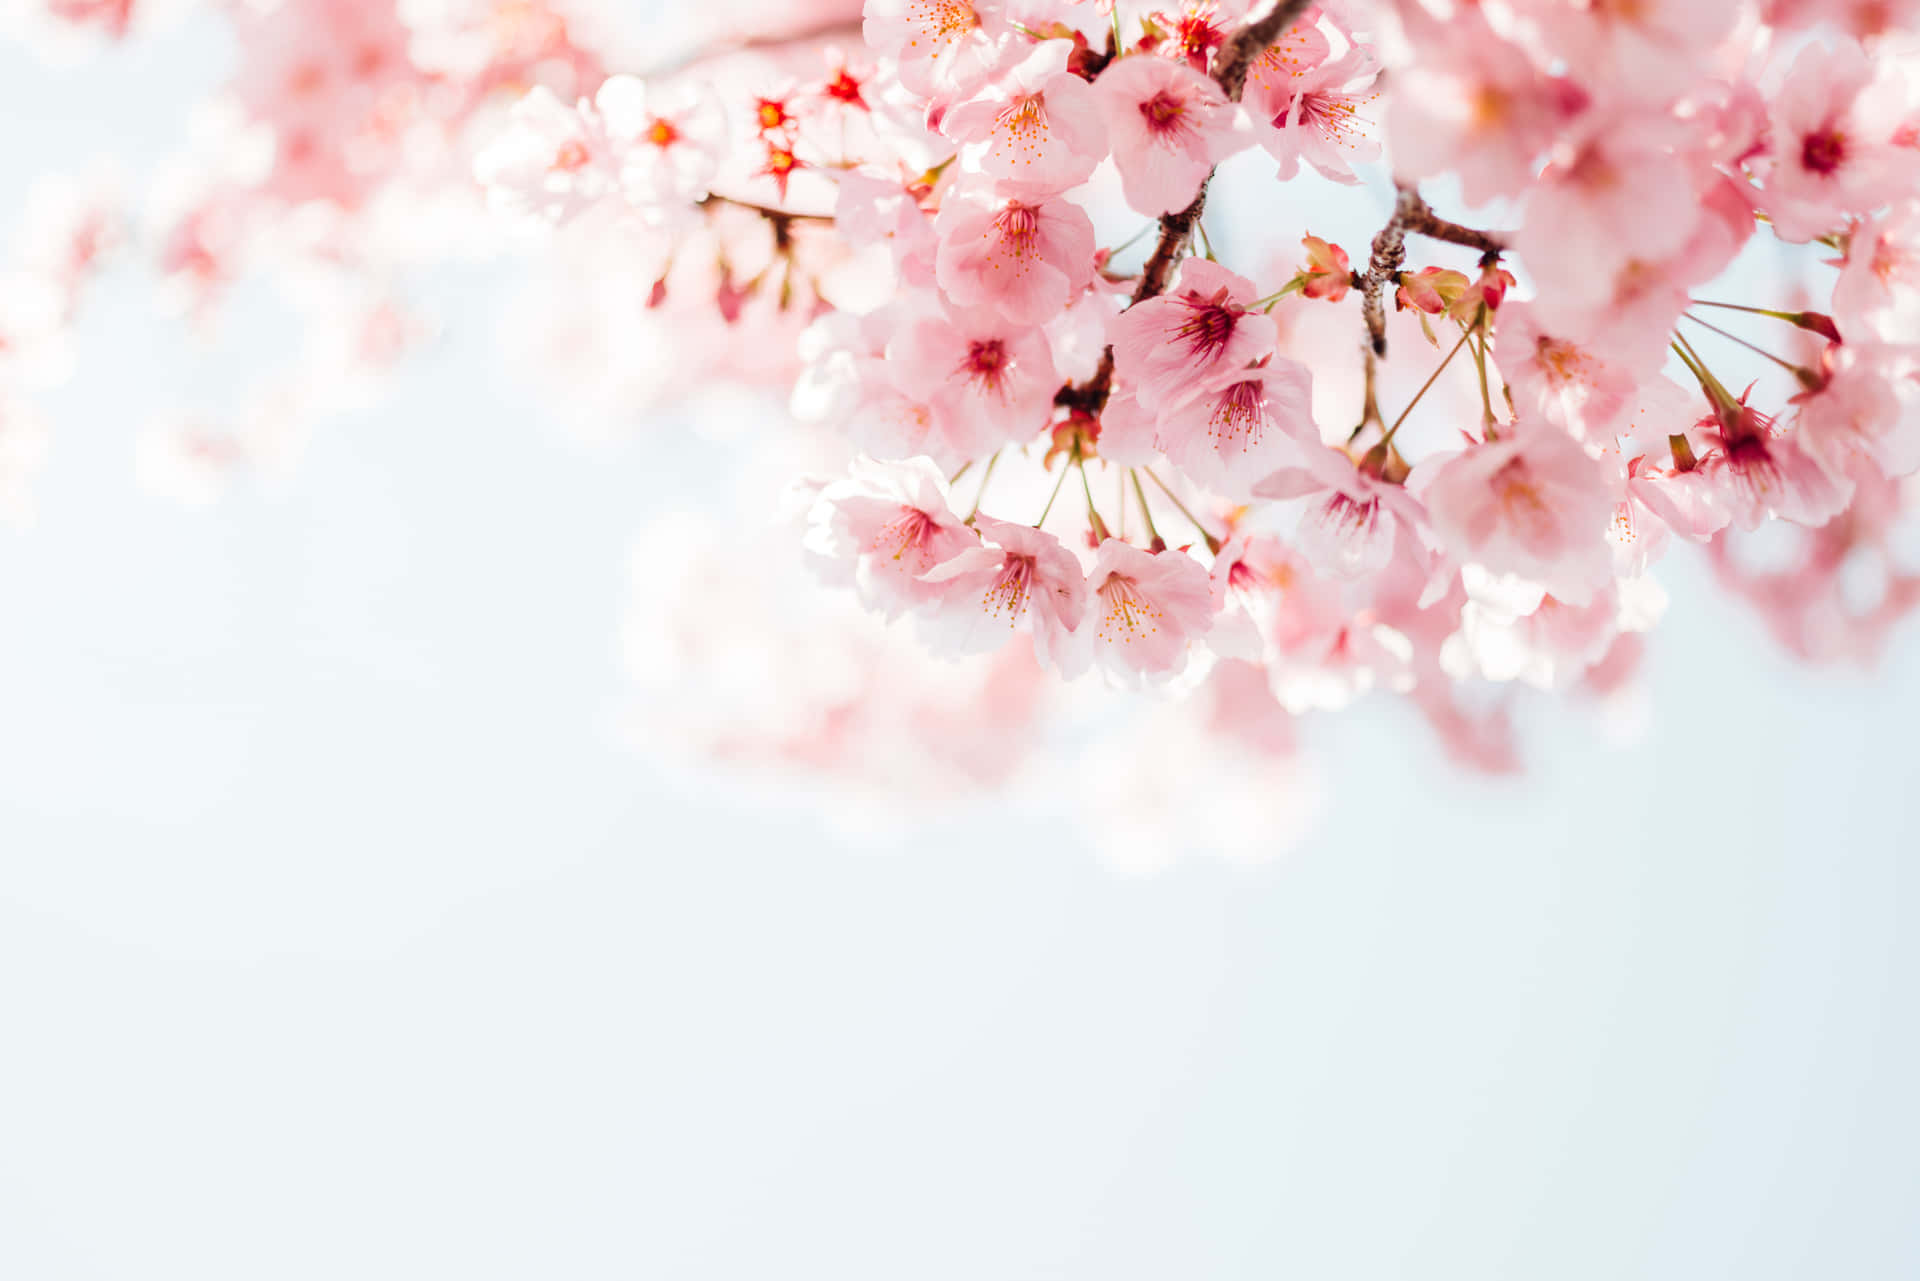 Schönerrosa Kirschblütenbaum In Voller Blüte Wallpaper